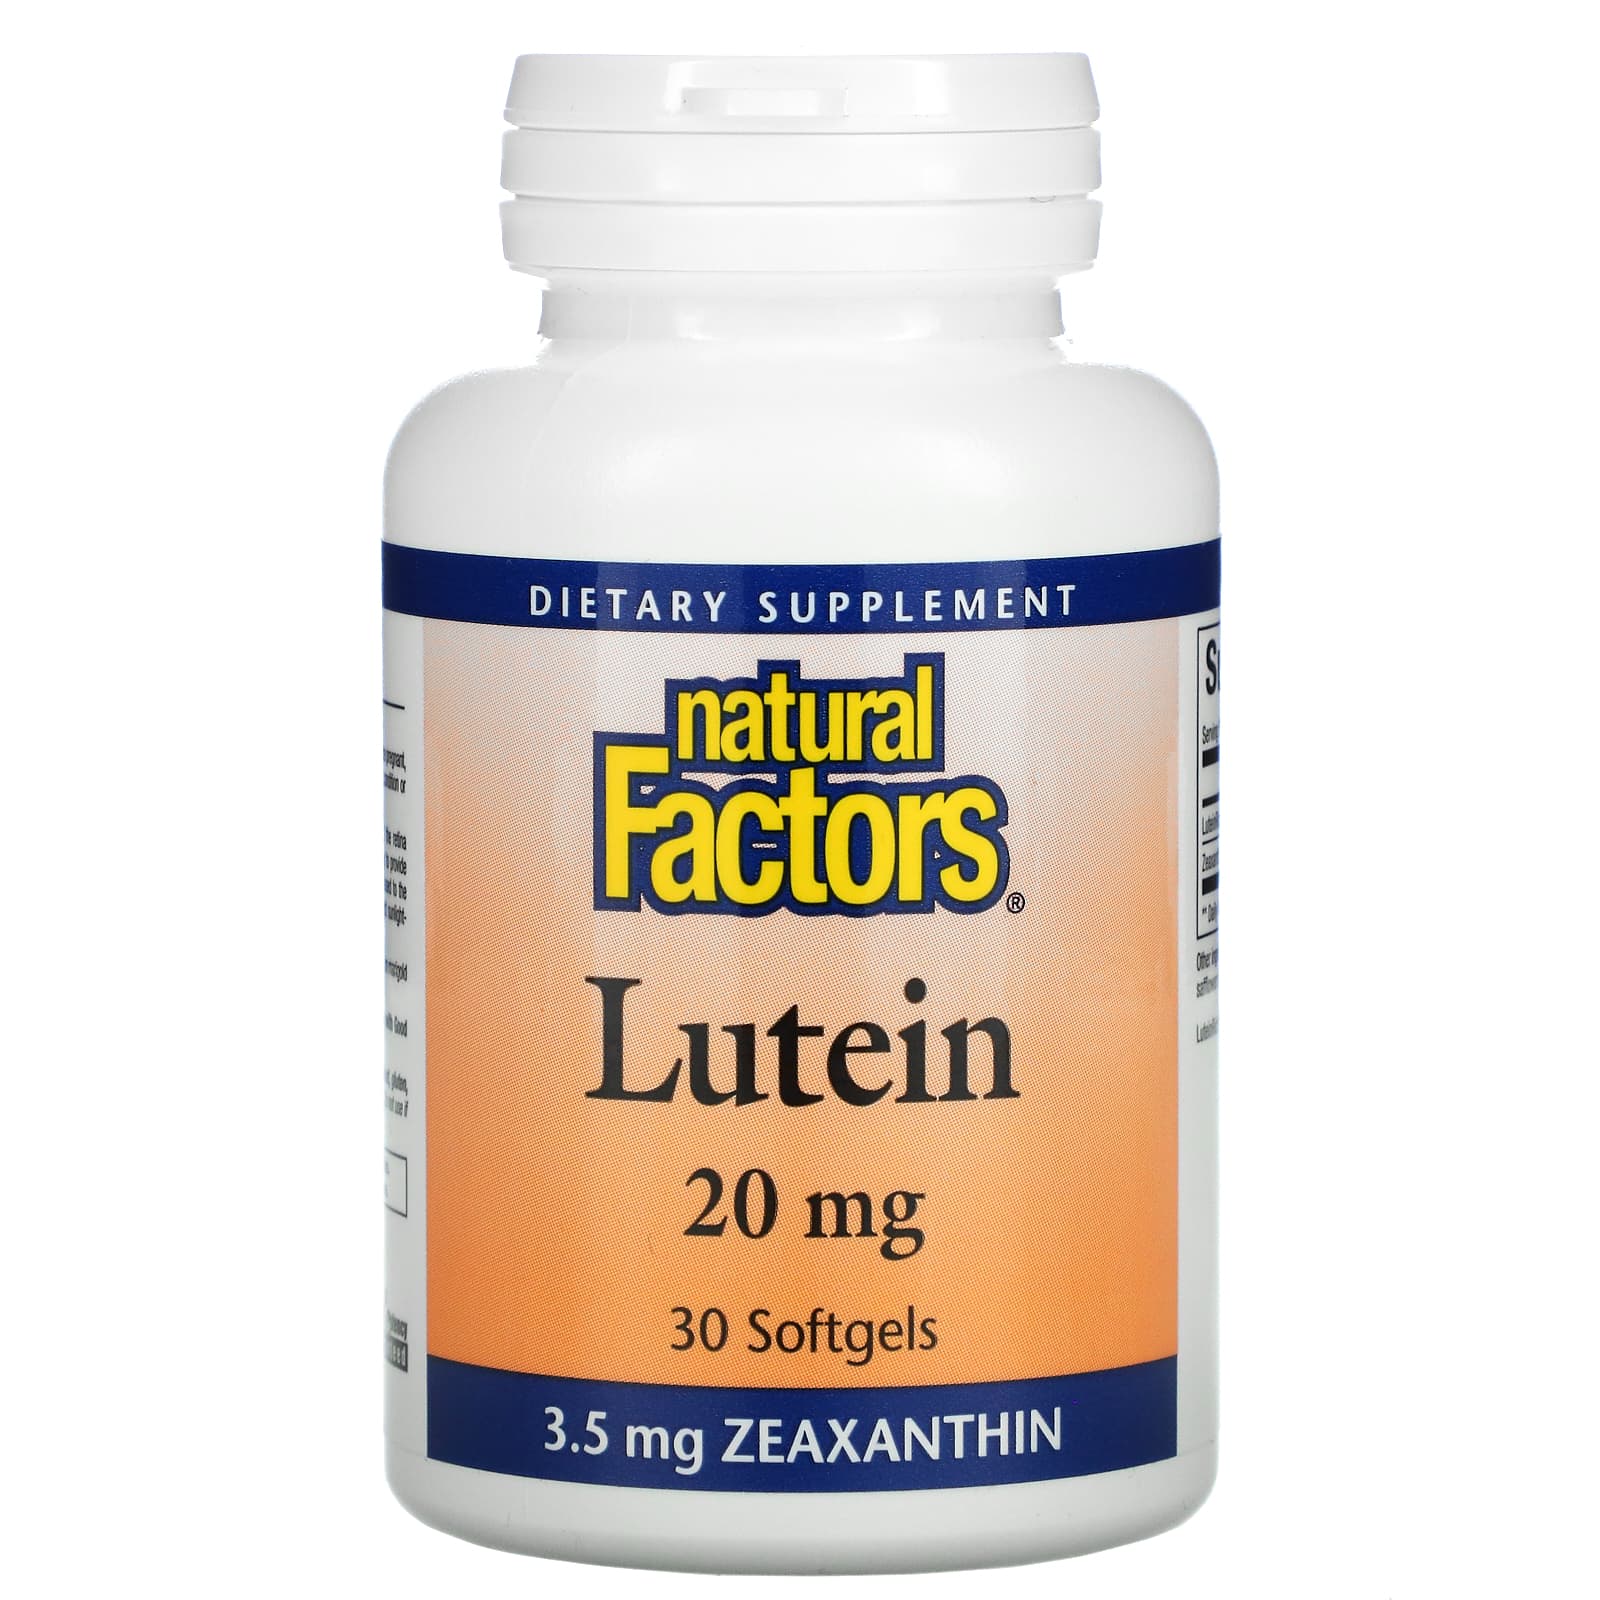 Natural Factors Lutein 20 Mg, 30 Softgels